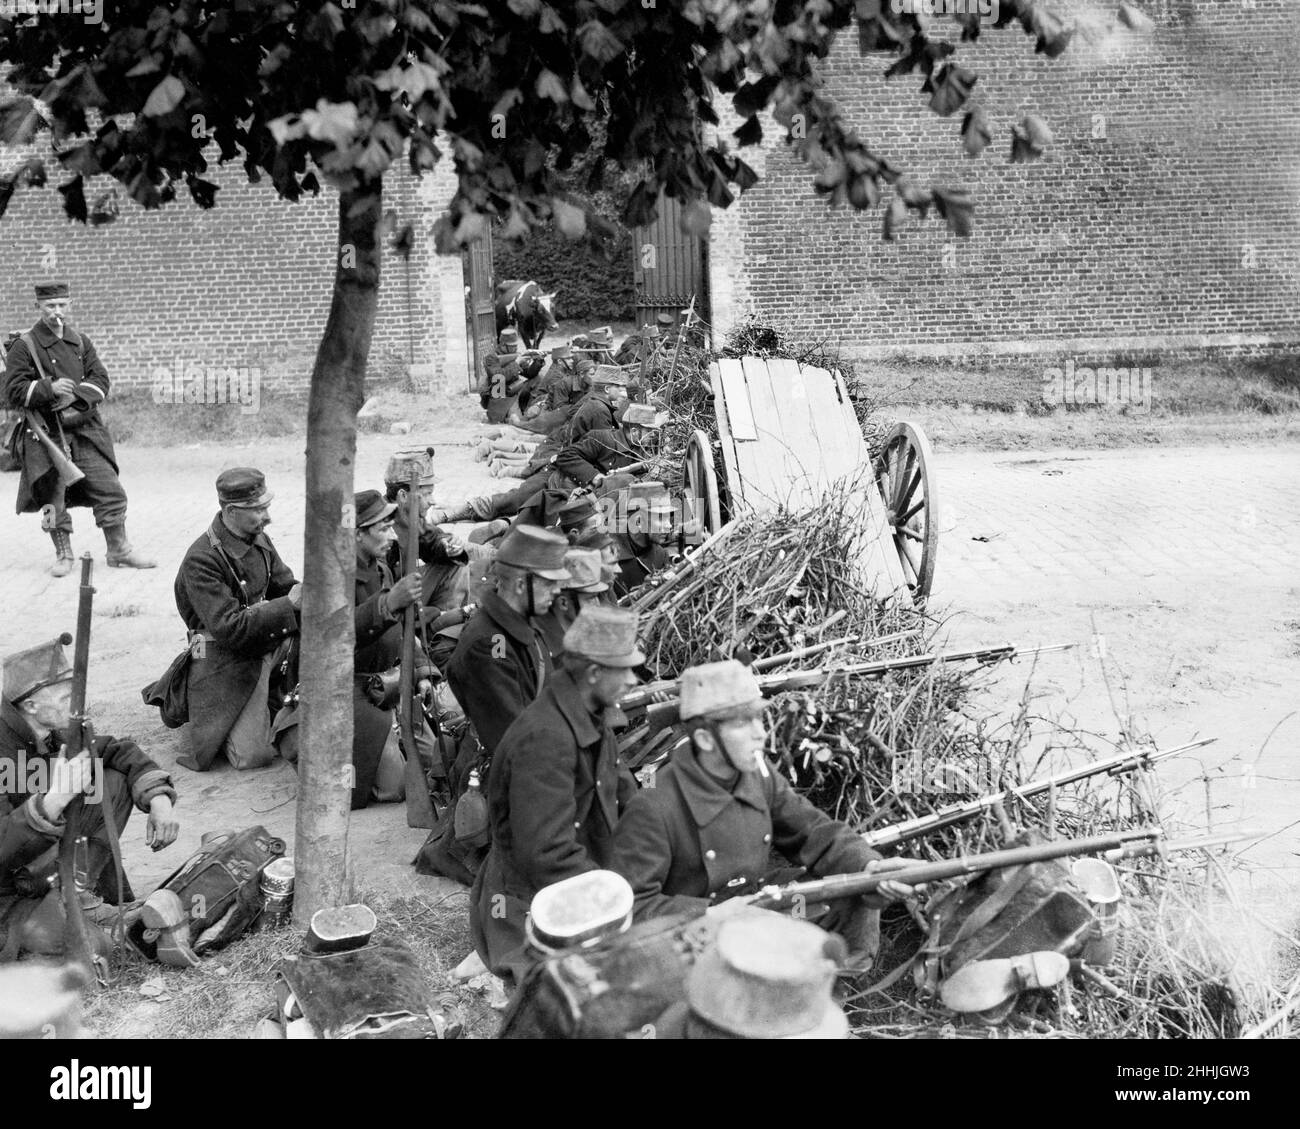 Chars allemands dans une ville belge WW2 Belgique 40 